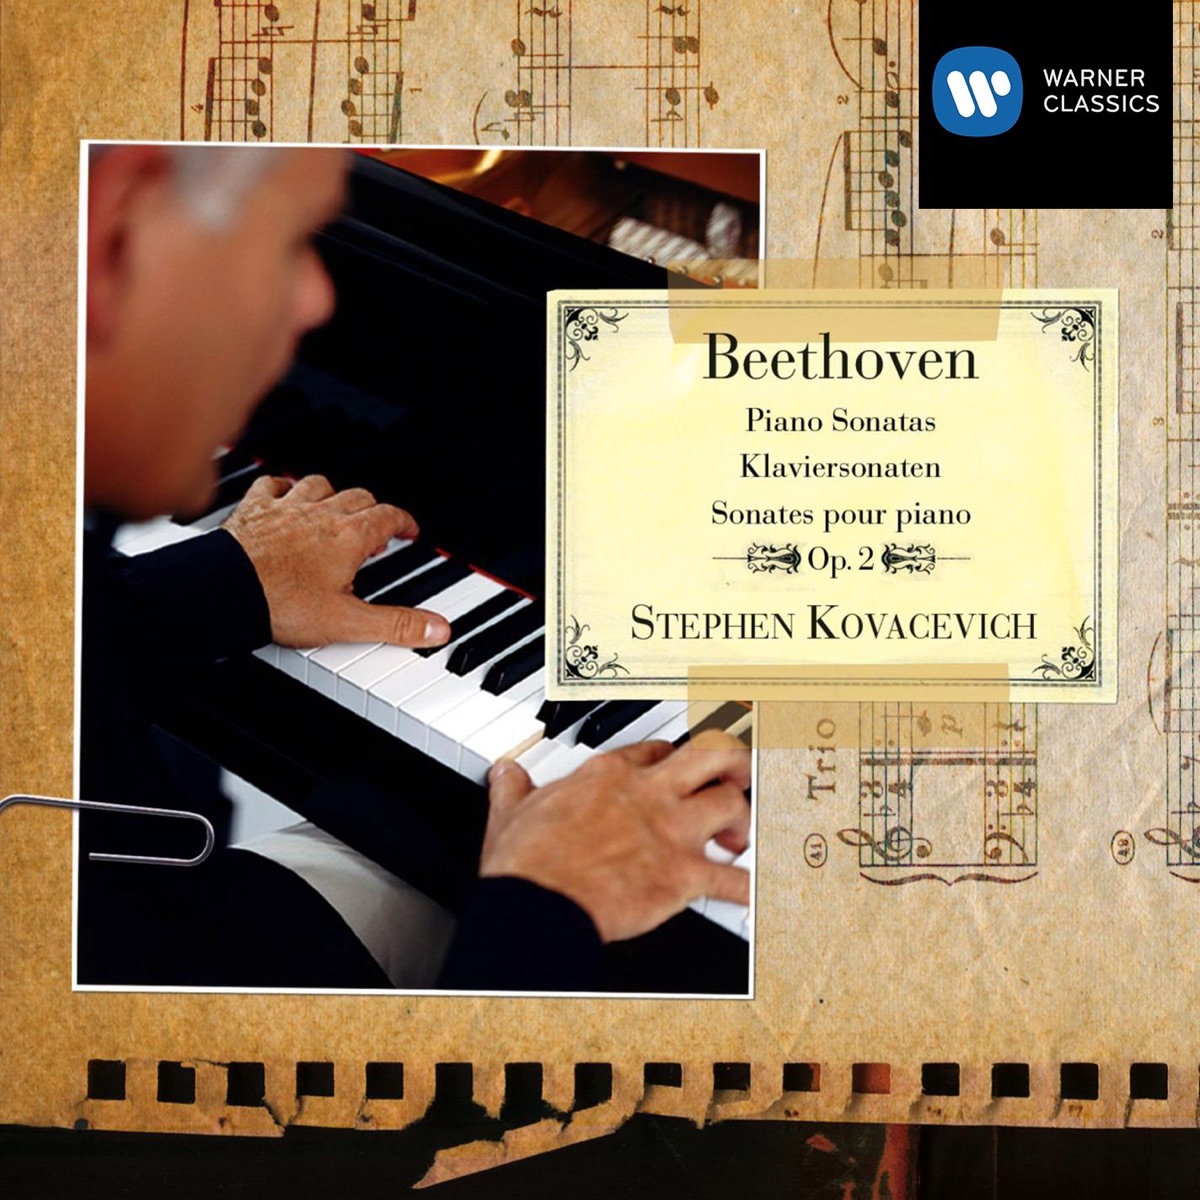 Beethoven: Piano Sonatas Op. 2 - Album by Stephen Kovacevich - Apple Music